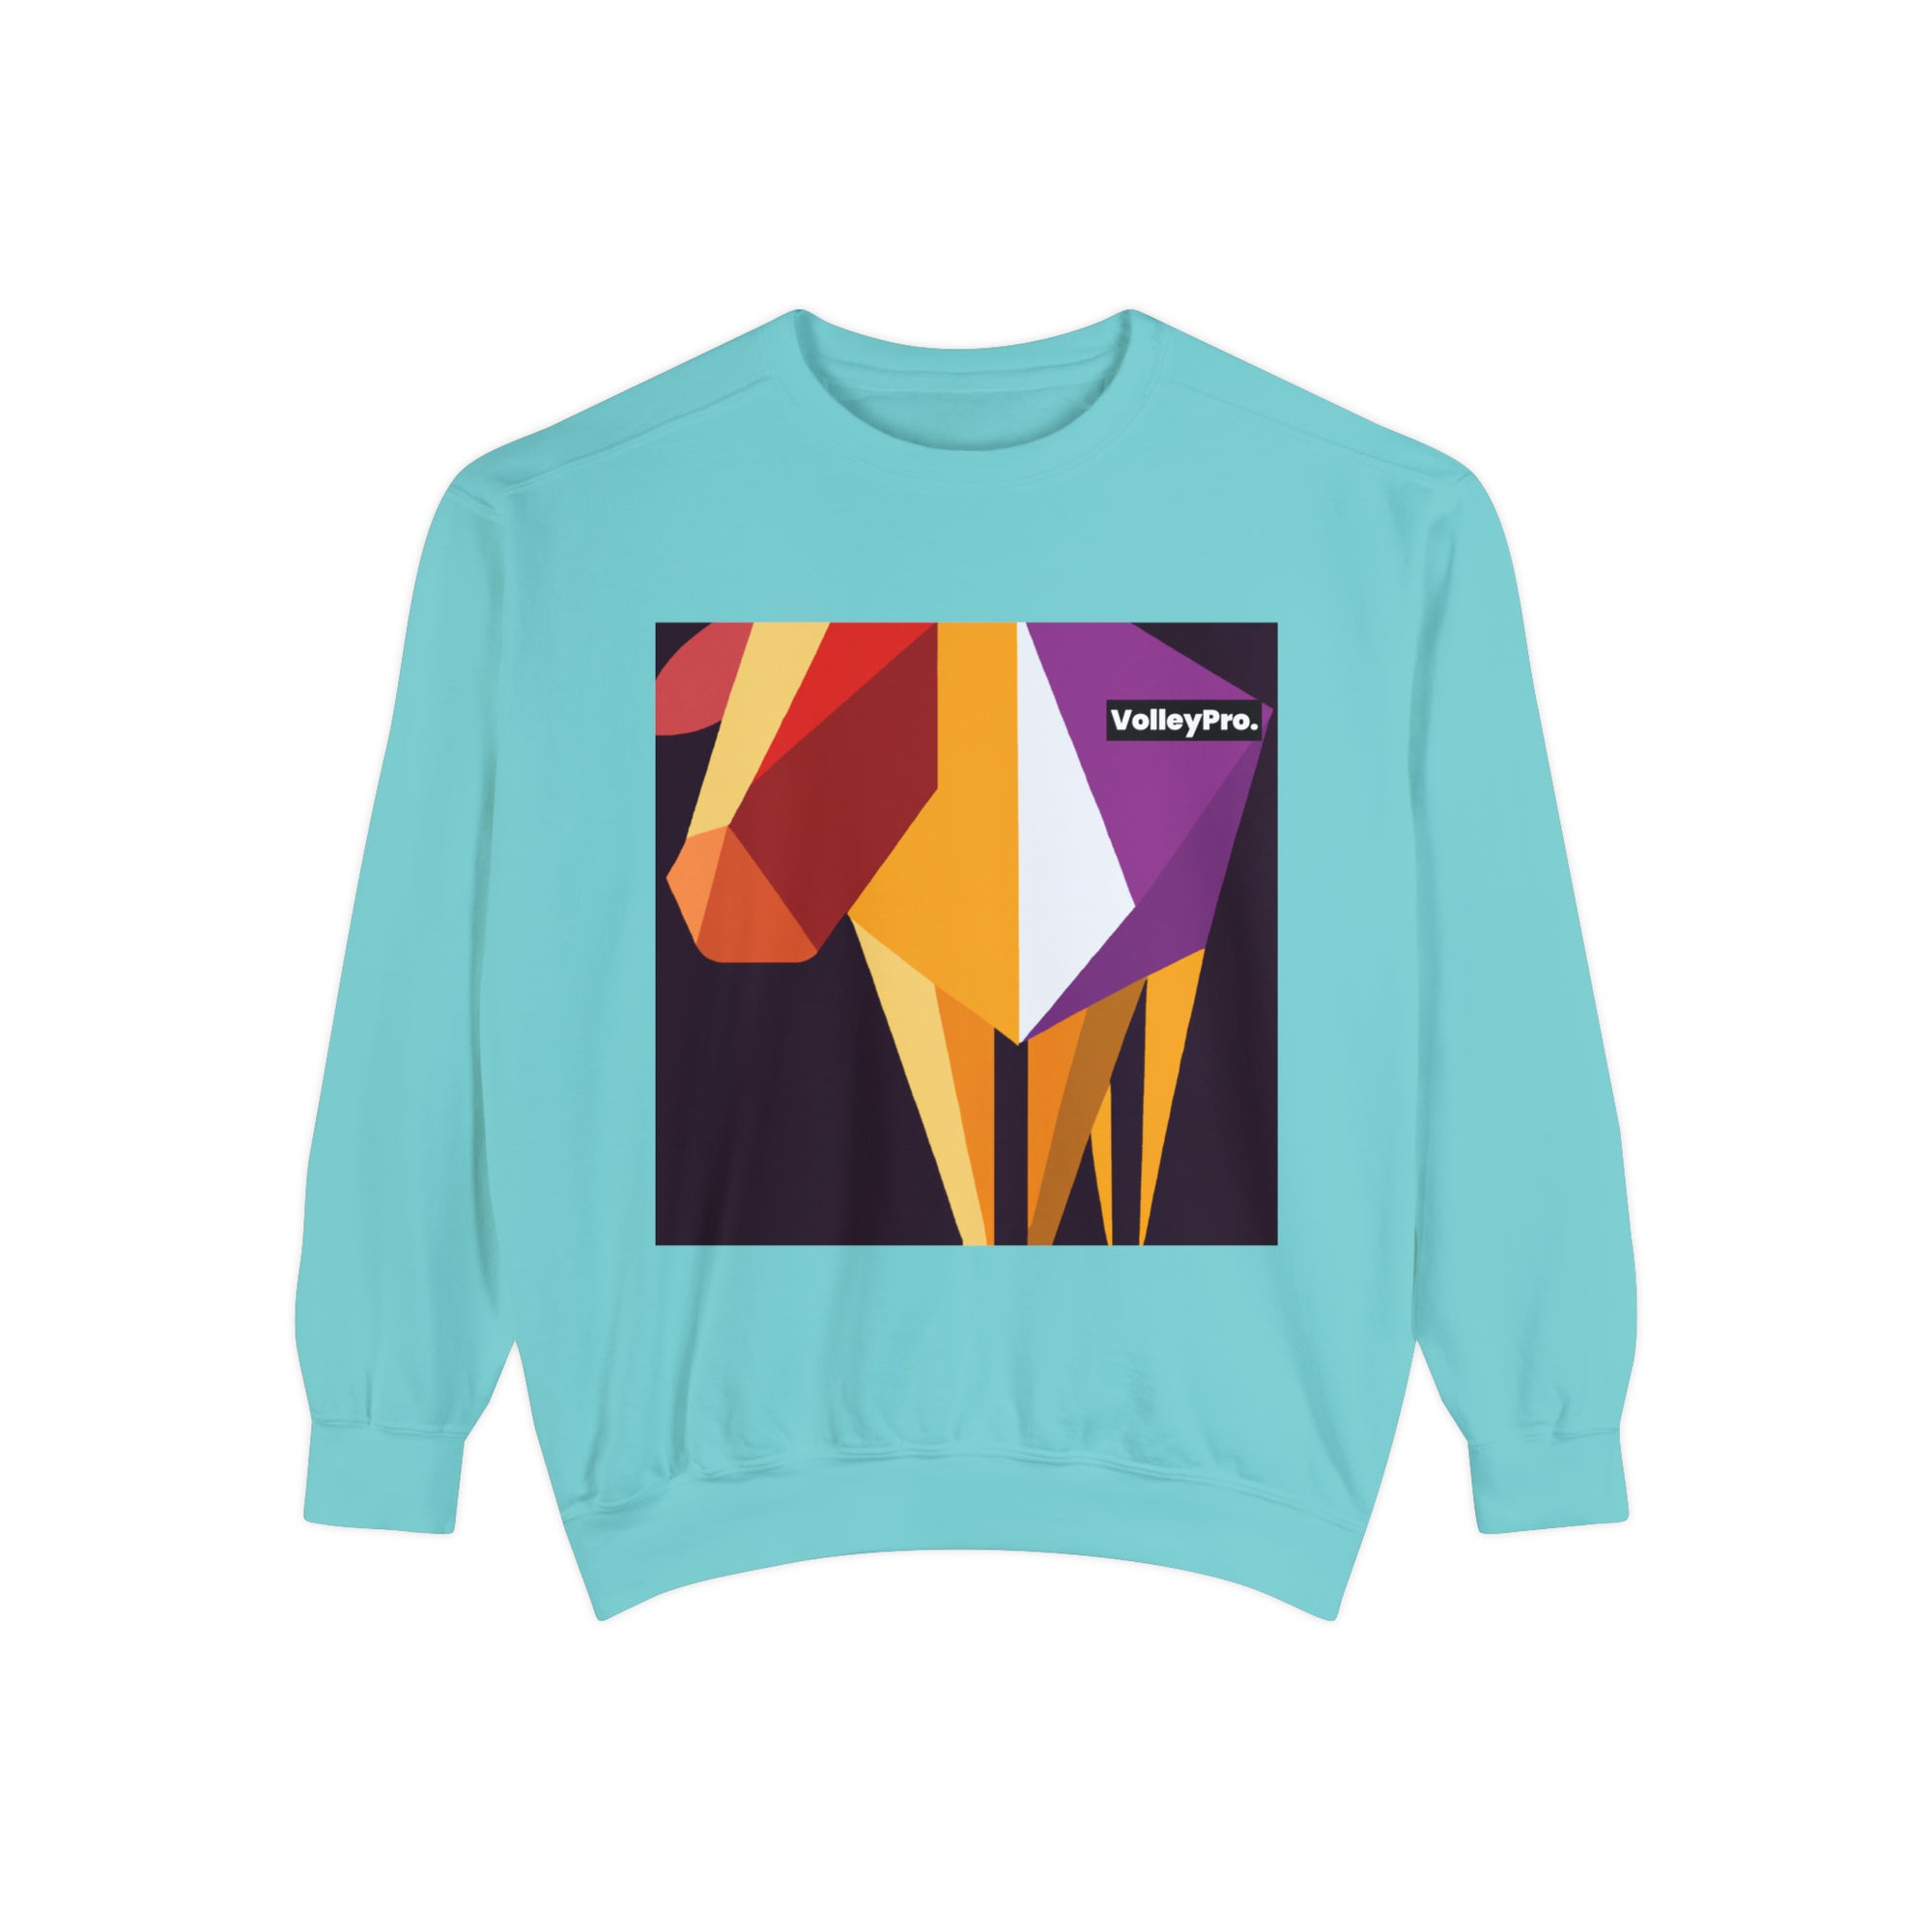 "Go Get It!" - Sweatshirt Garment-Dyed